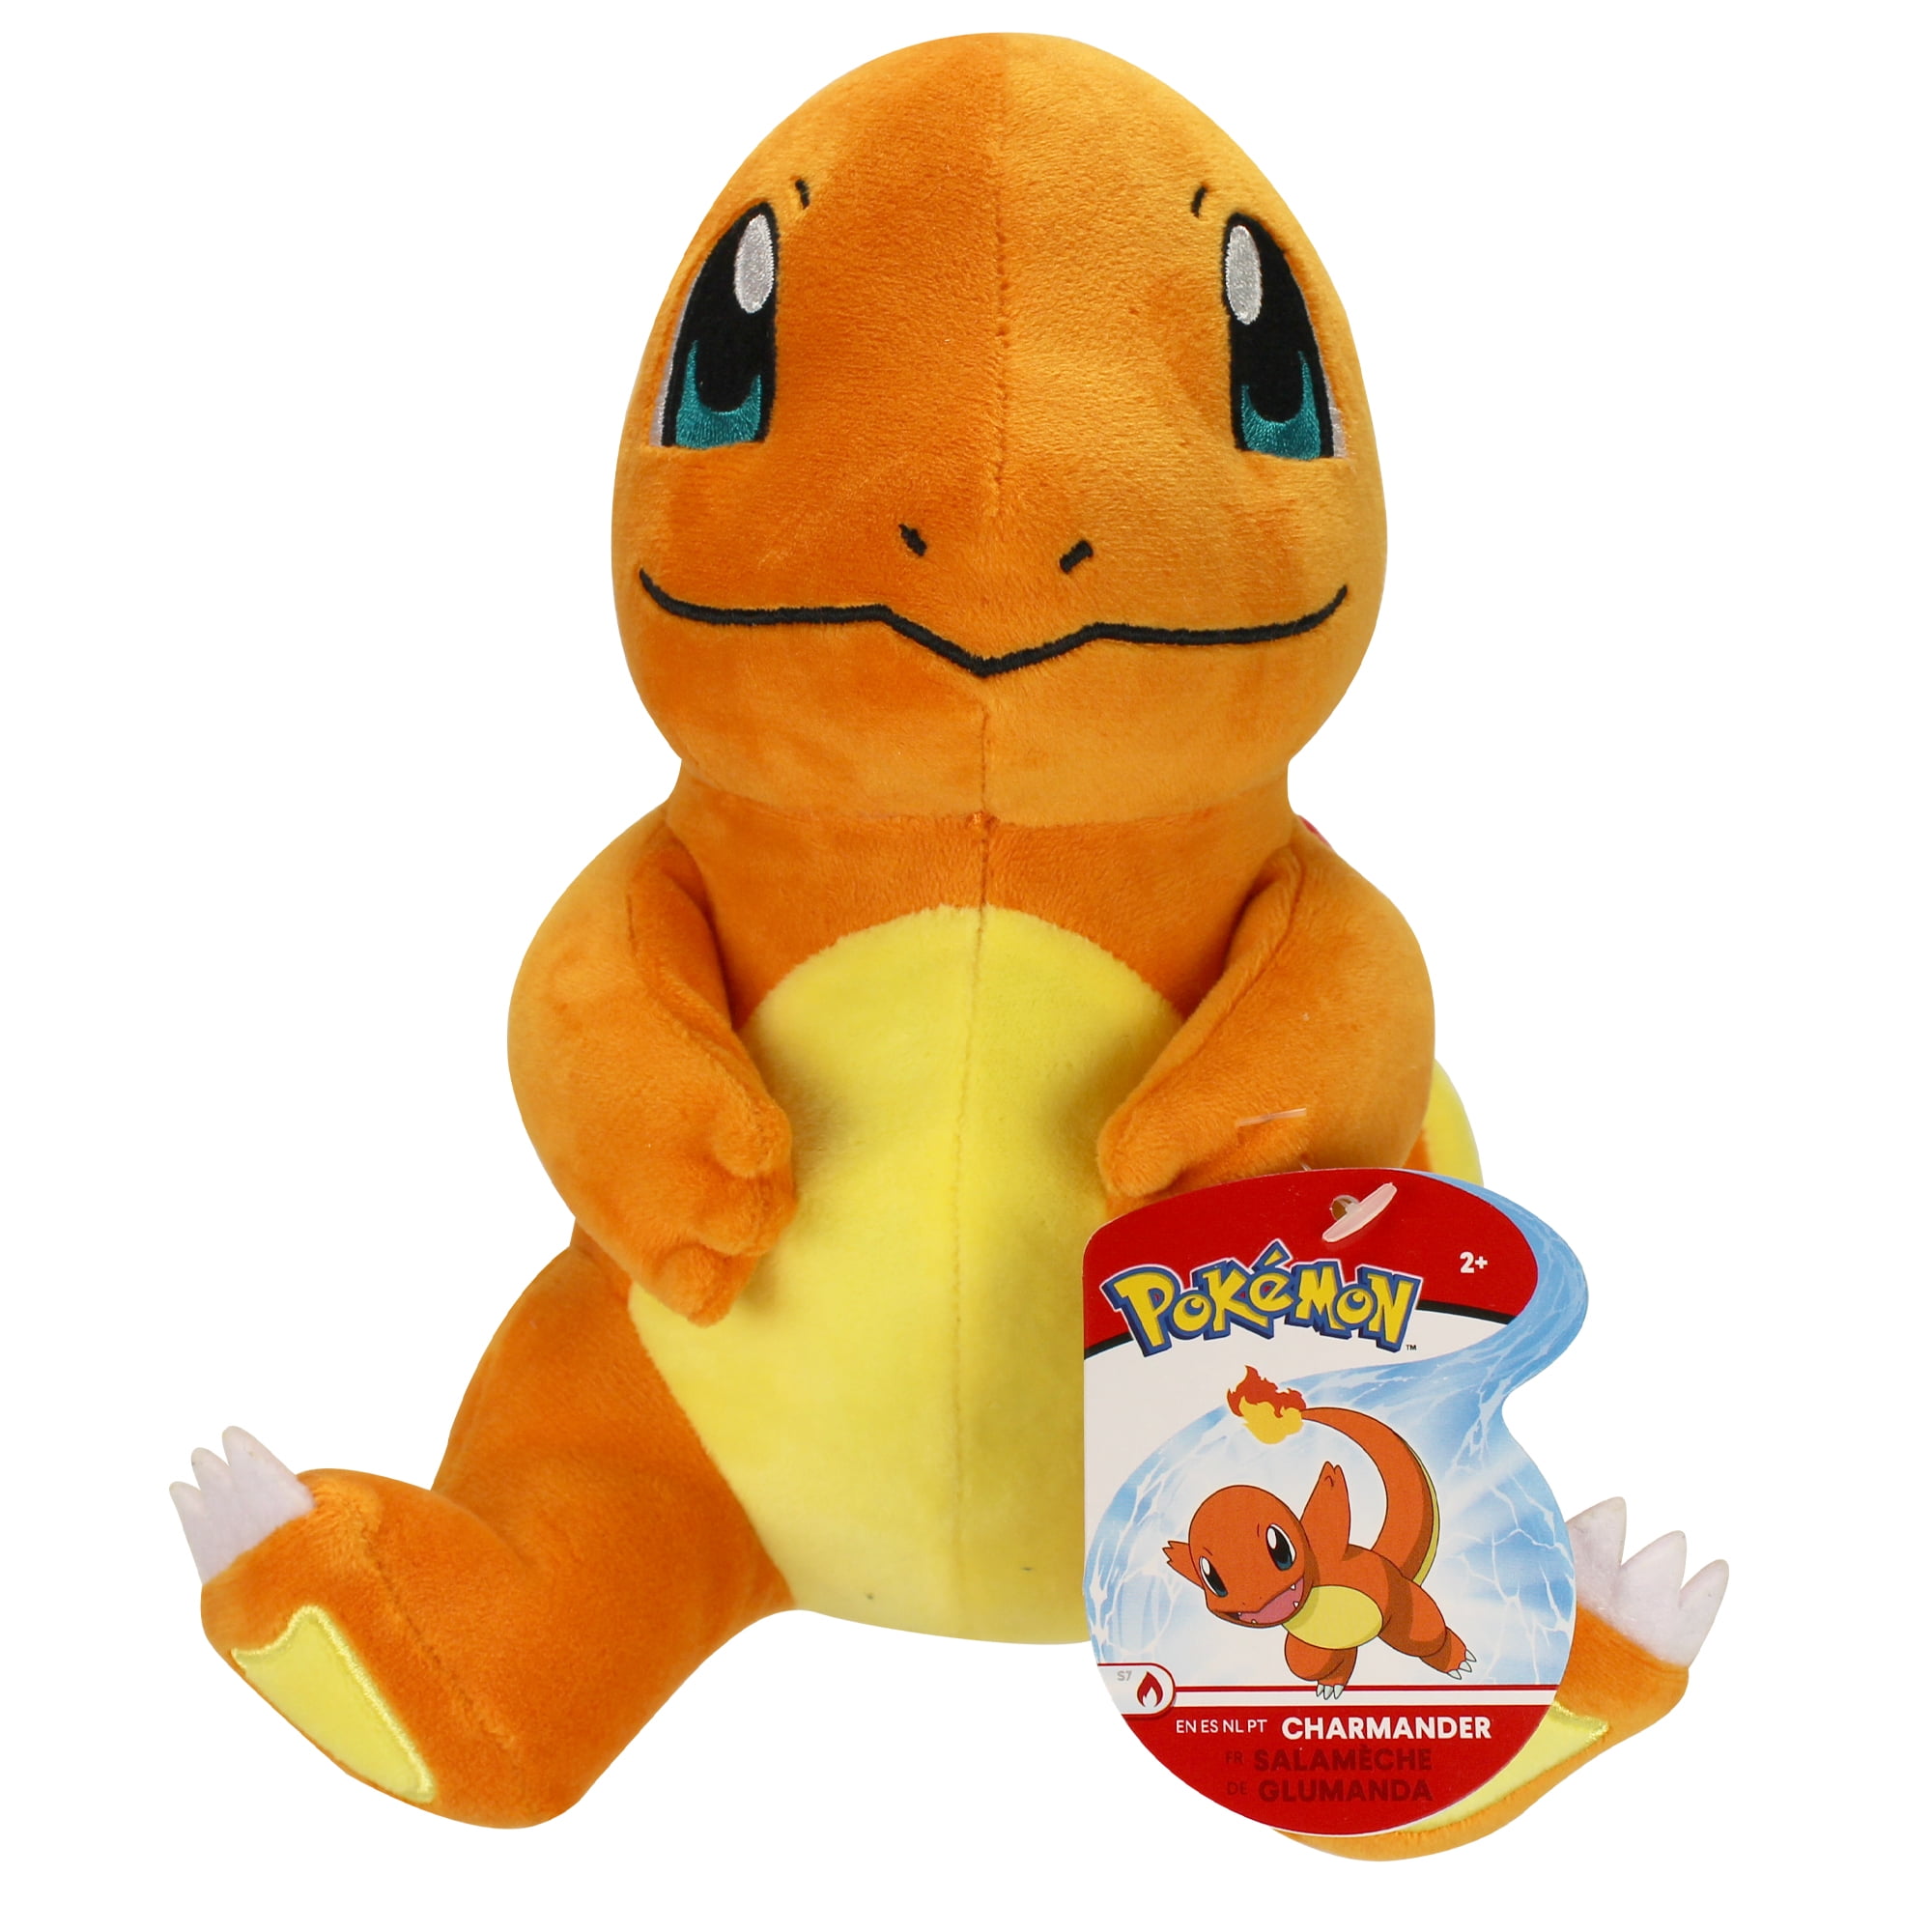 Charmander Hitokage Pokemon Plush Toy Starter Kanto Fire Type Stuffed Animal 5"